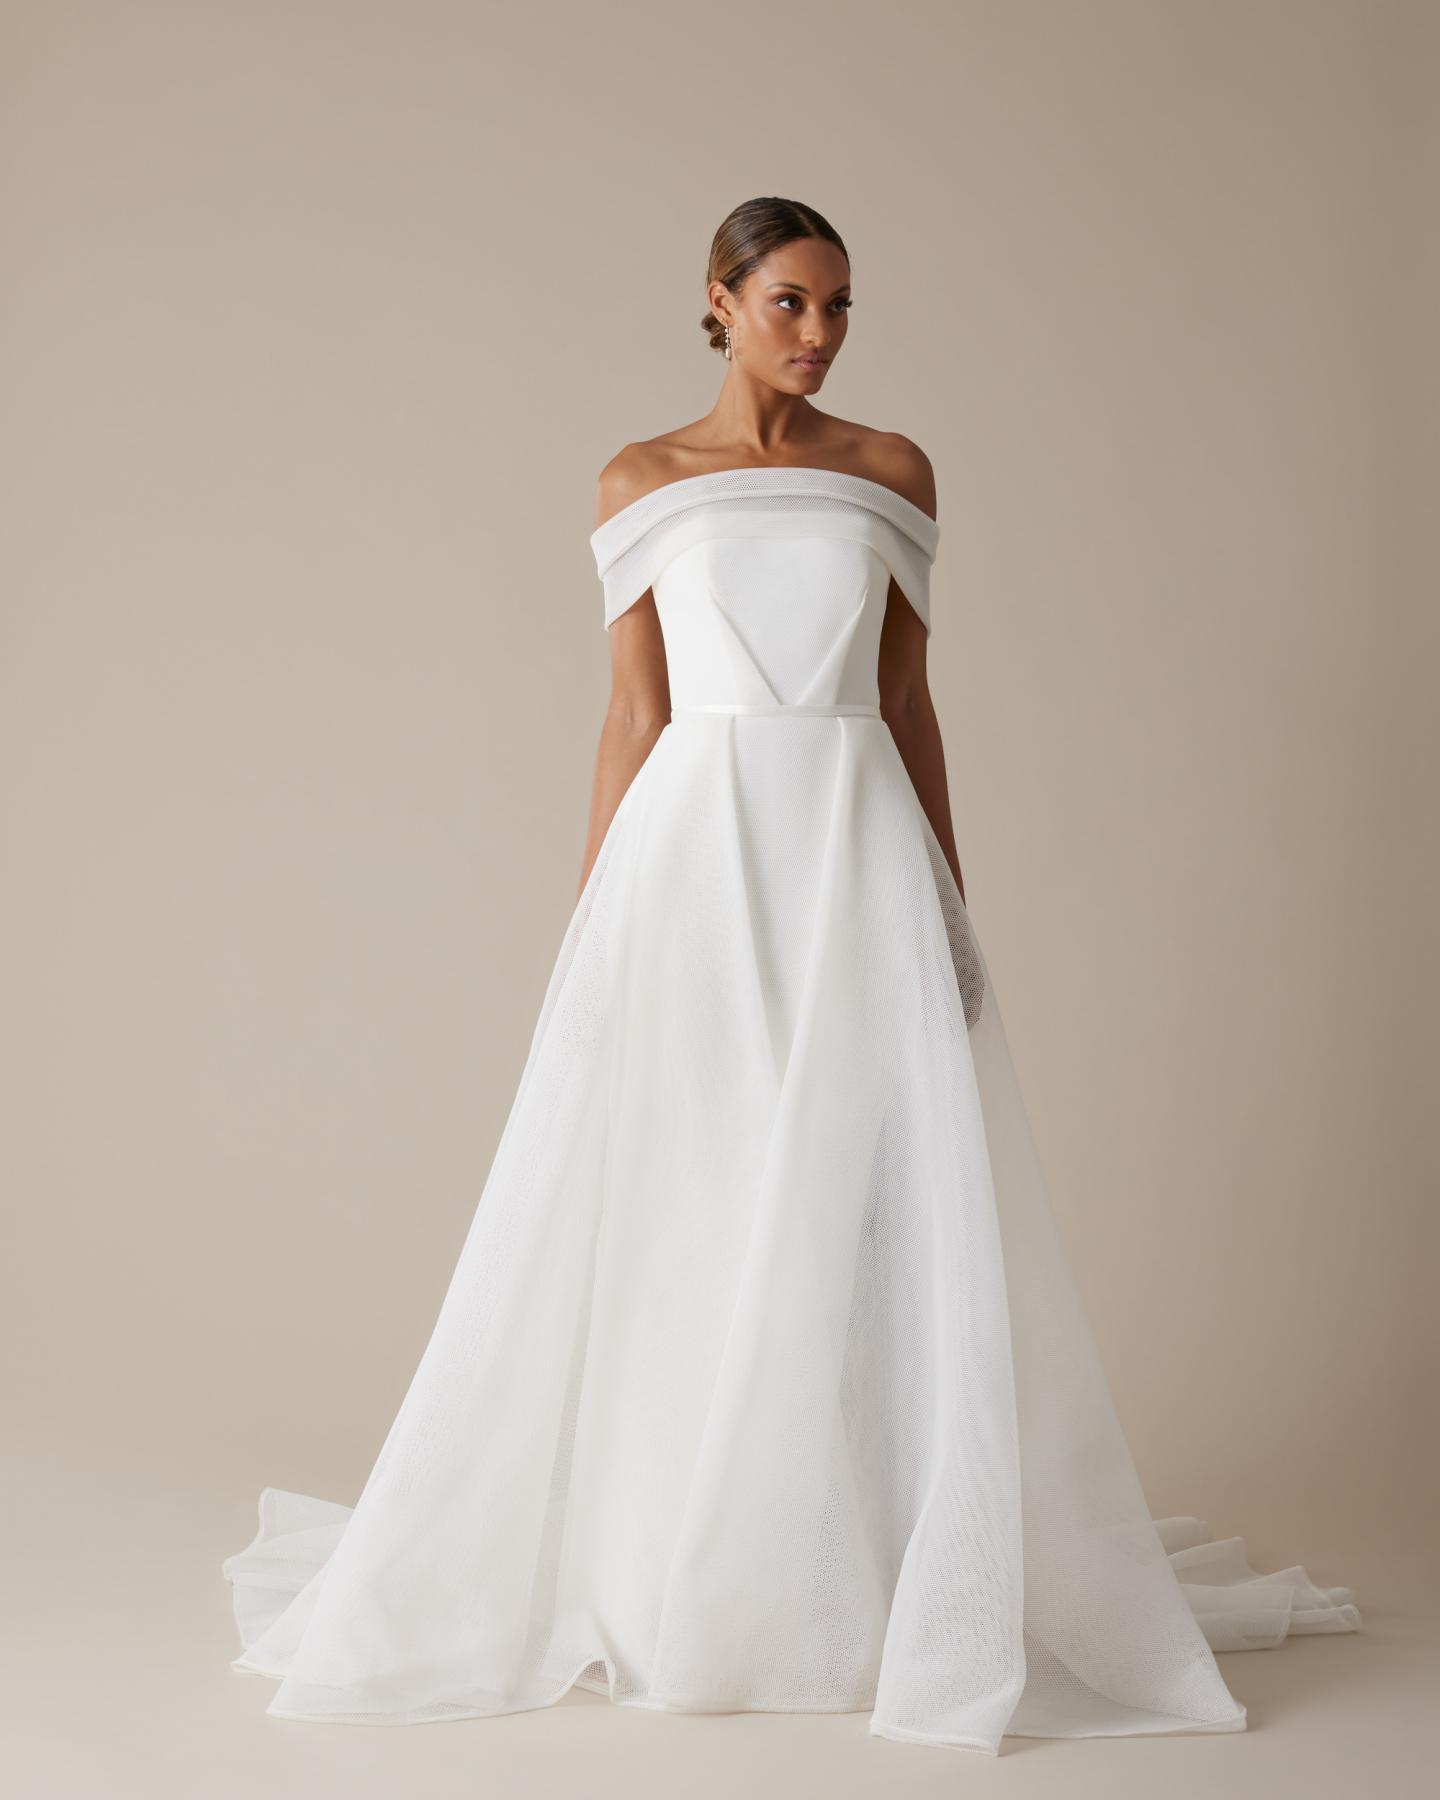 2023 Strapless Wedding Dress Trends…A Timeless Classic